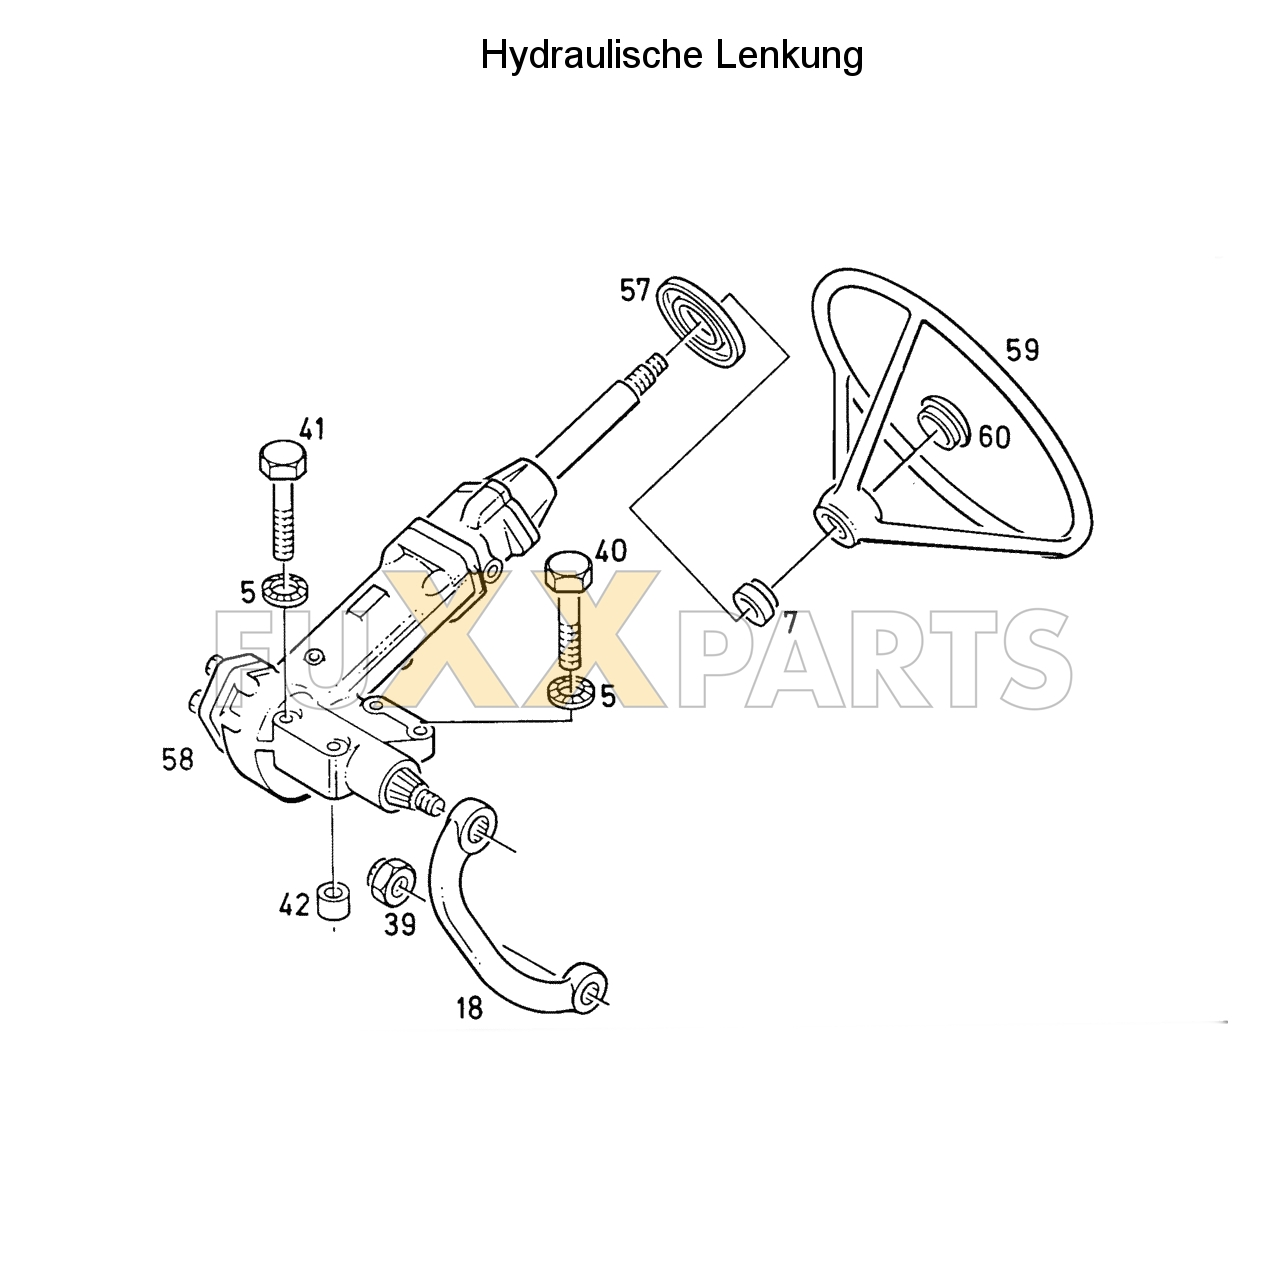 D 6507 Hydraulische Lenkung